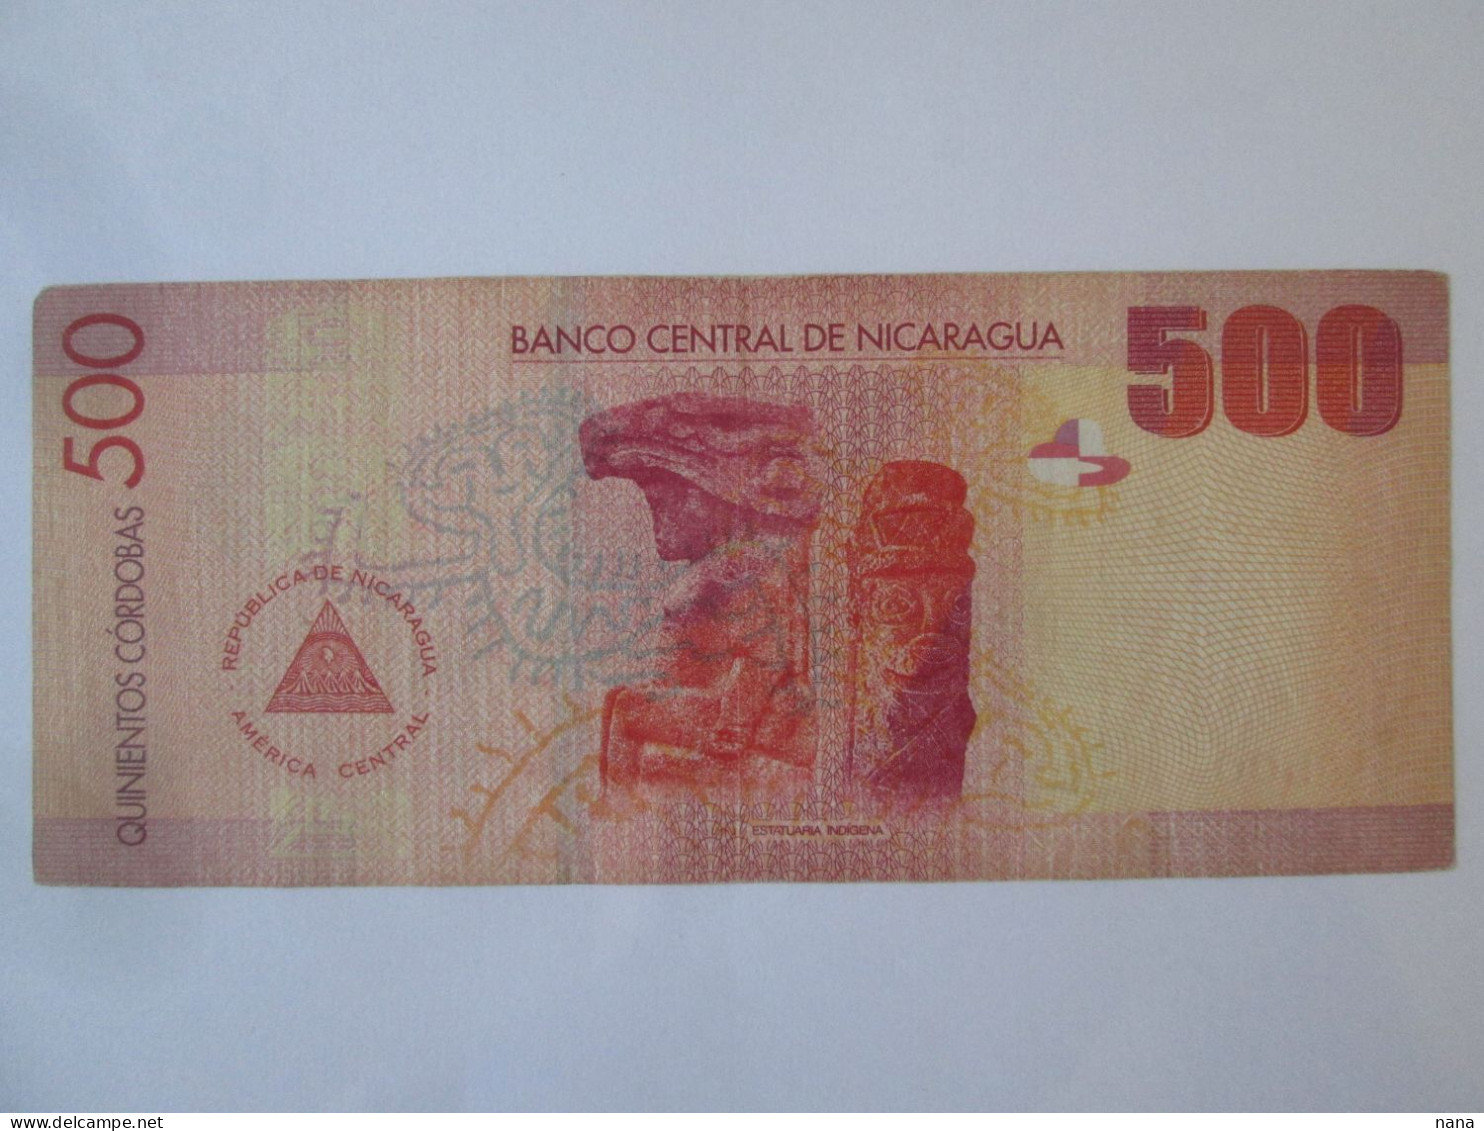 Rare Year! Nicaragua 500 Cordobas 2007 Banknote,see Pictures - Nicaragua